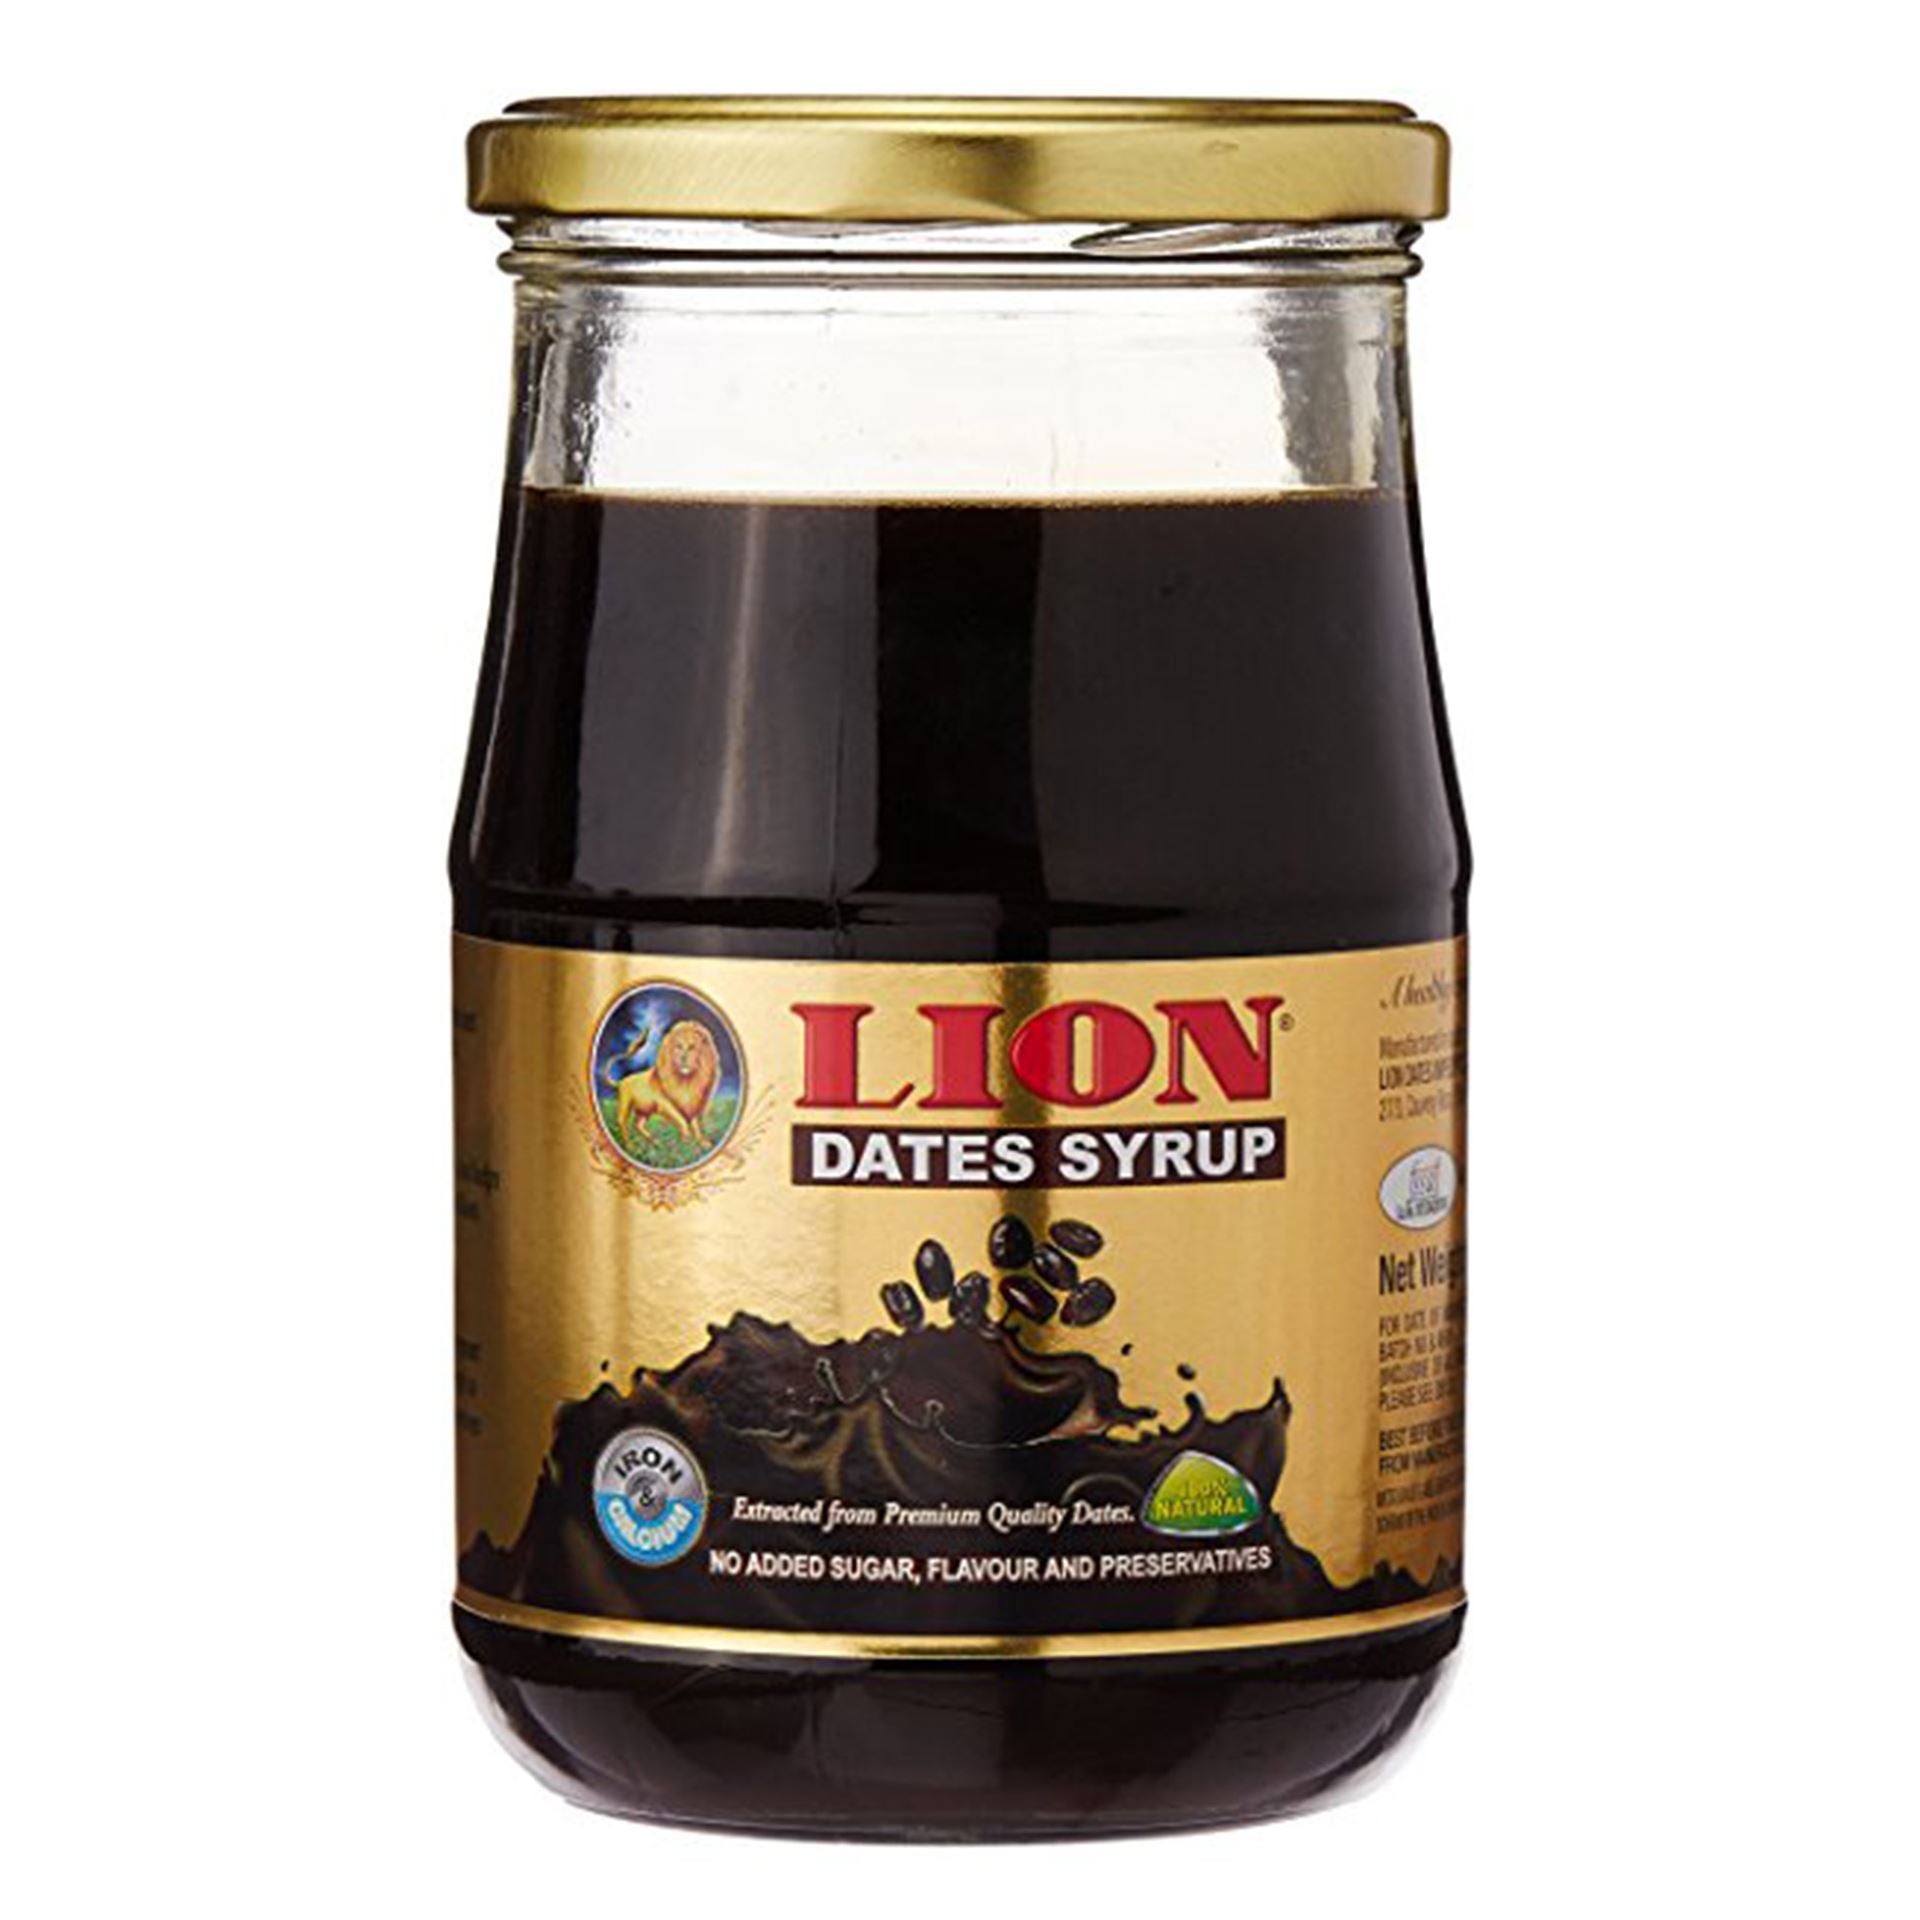 LION Dates Syrup Jar